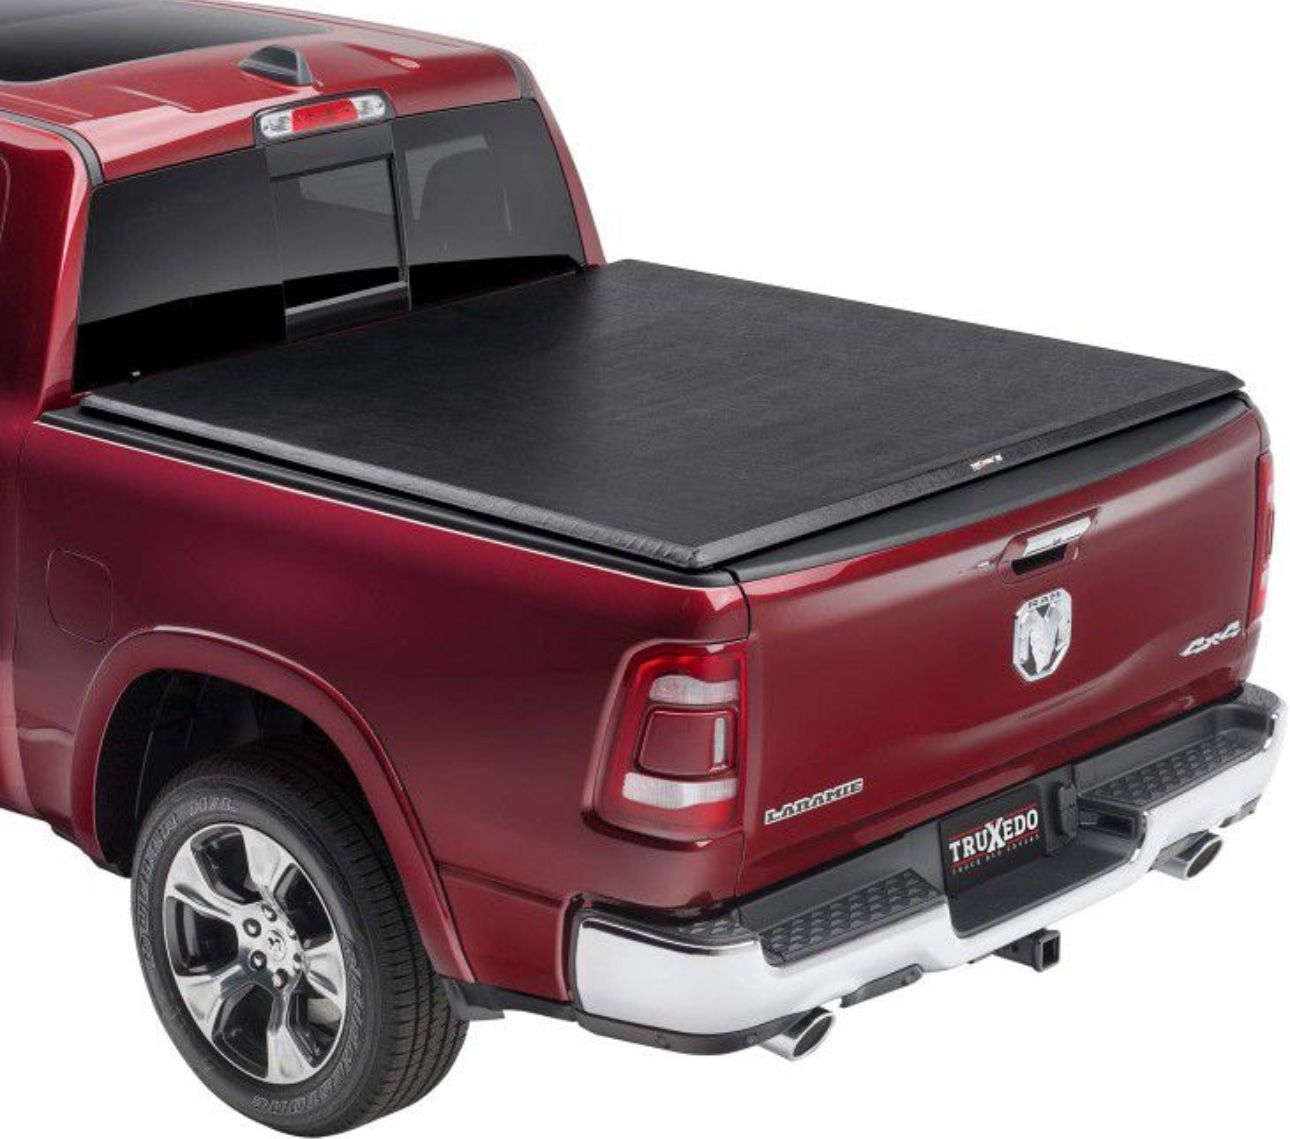 TruXedo TruXport Soft Roll Up Truck Bed Tonneau Cover | 290101 | Fits 2000 - 2007 Dodge Dakota Quad Cab 5' 3" Bed (63")